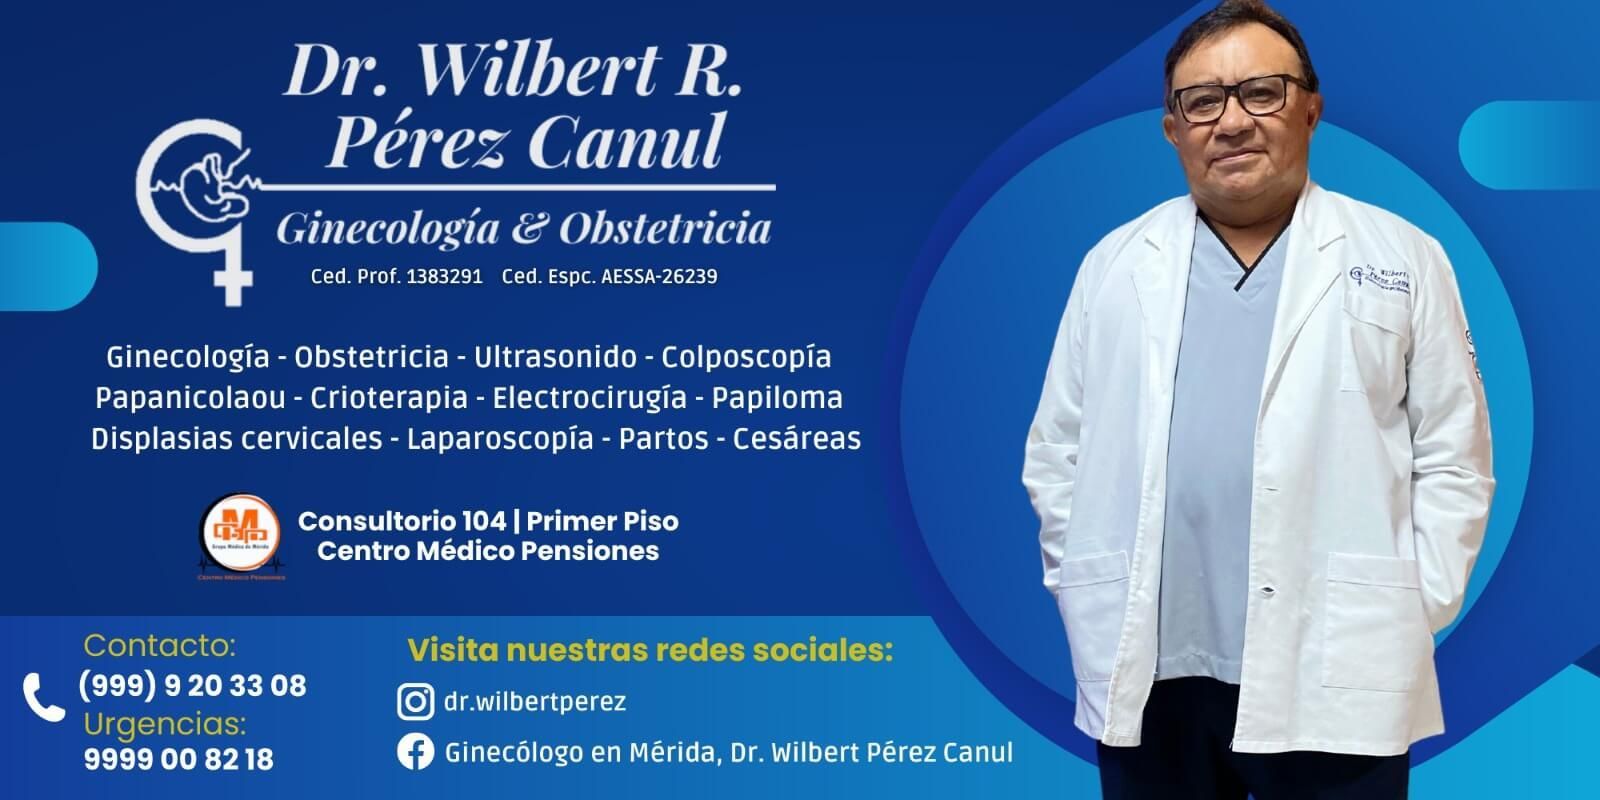 DR. WILBERT R. PÉREZ CANUL